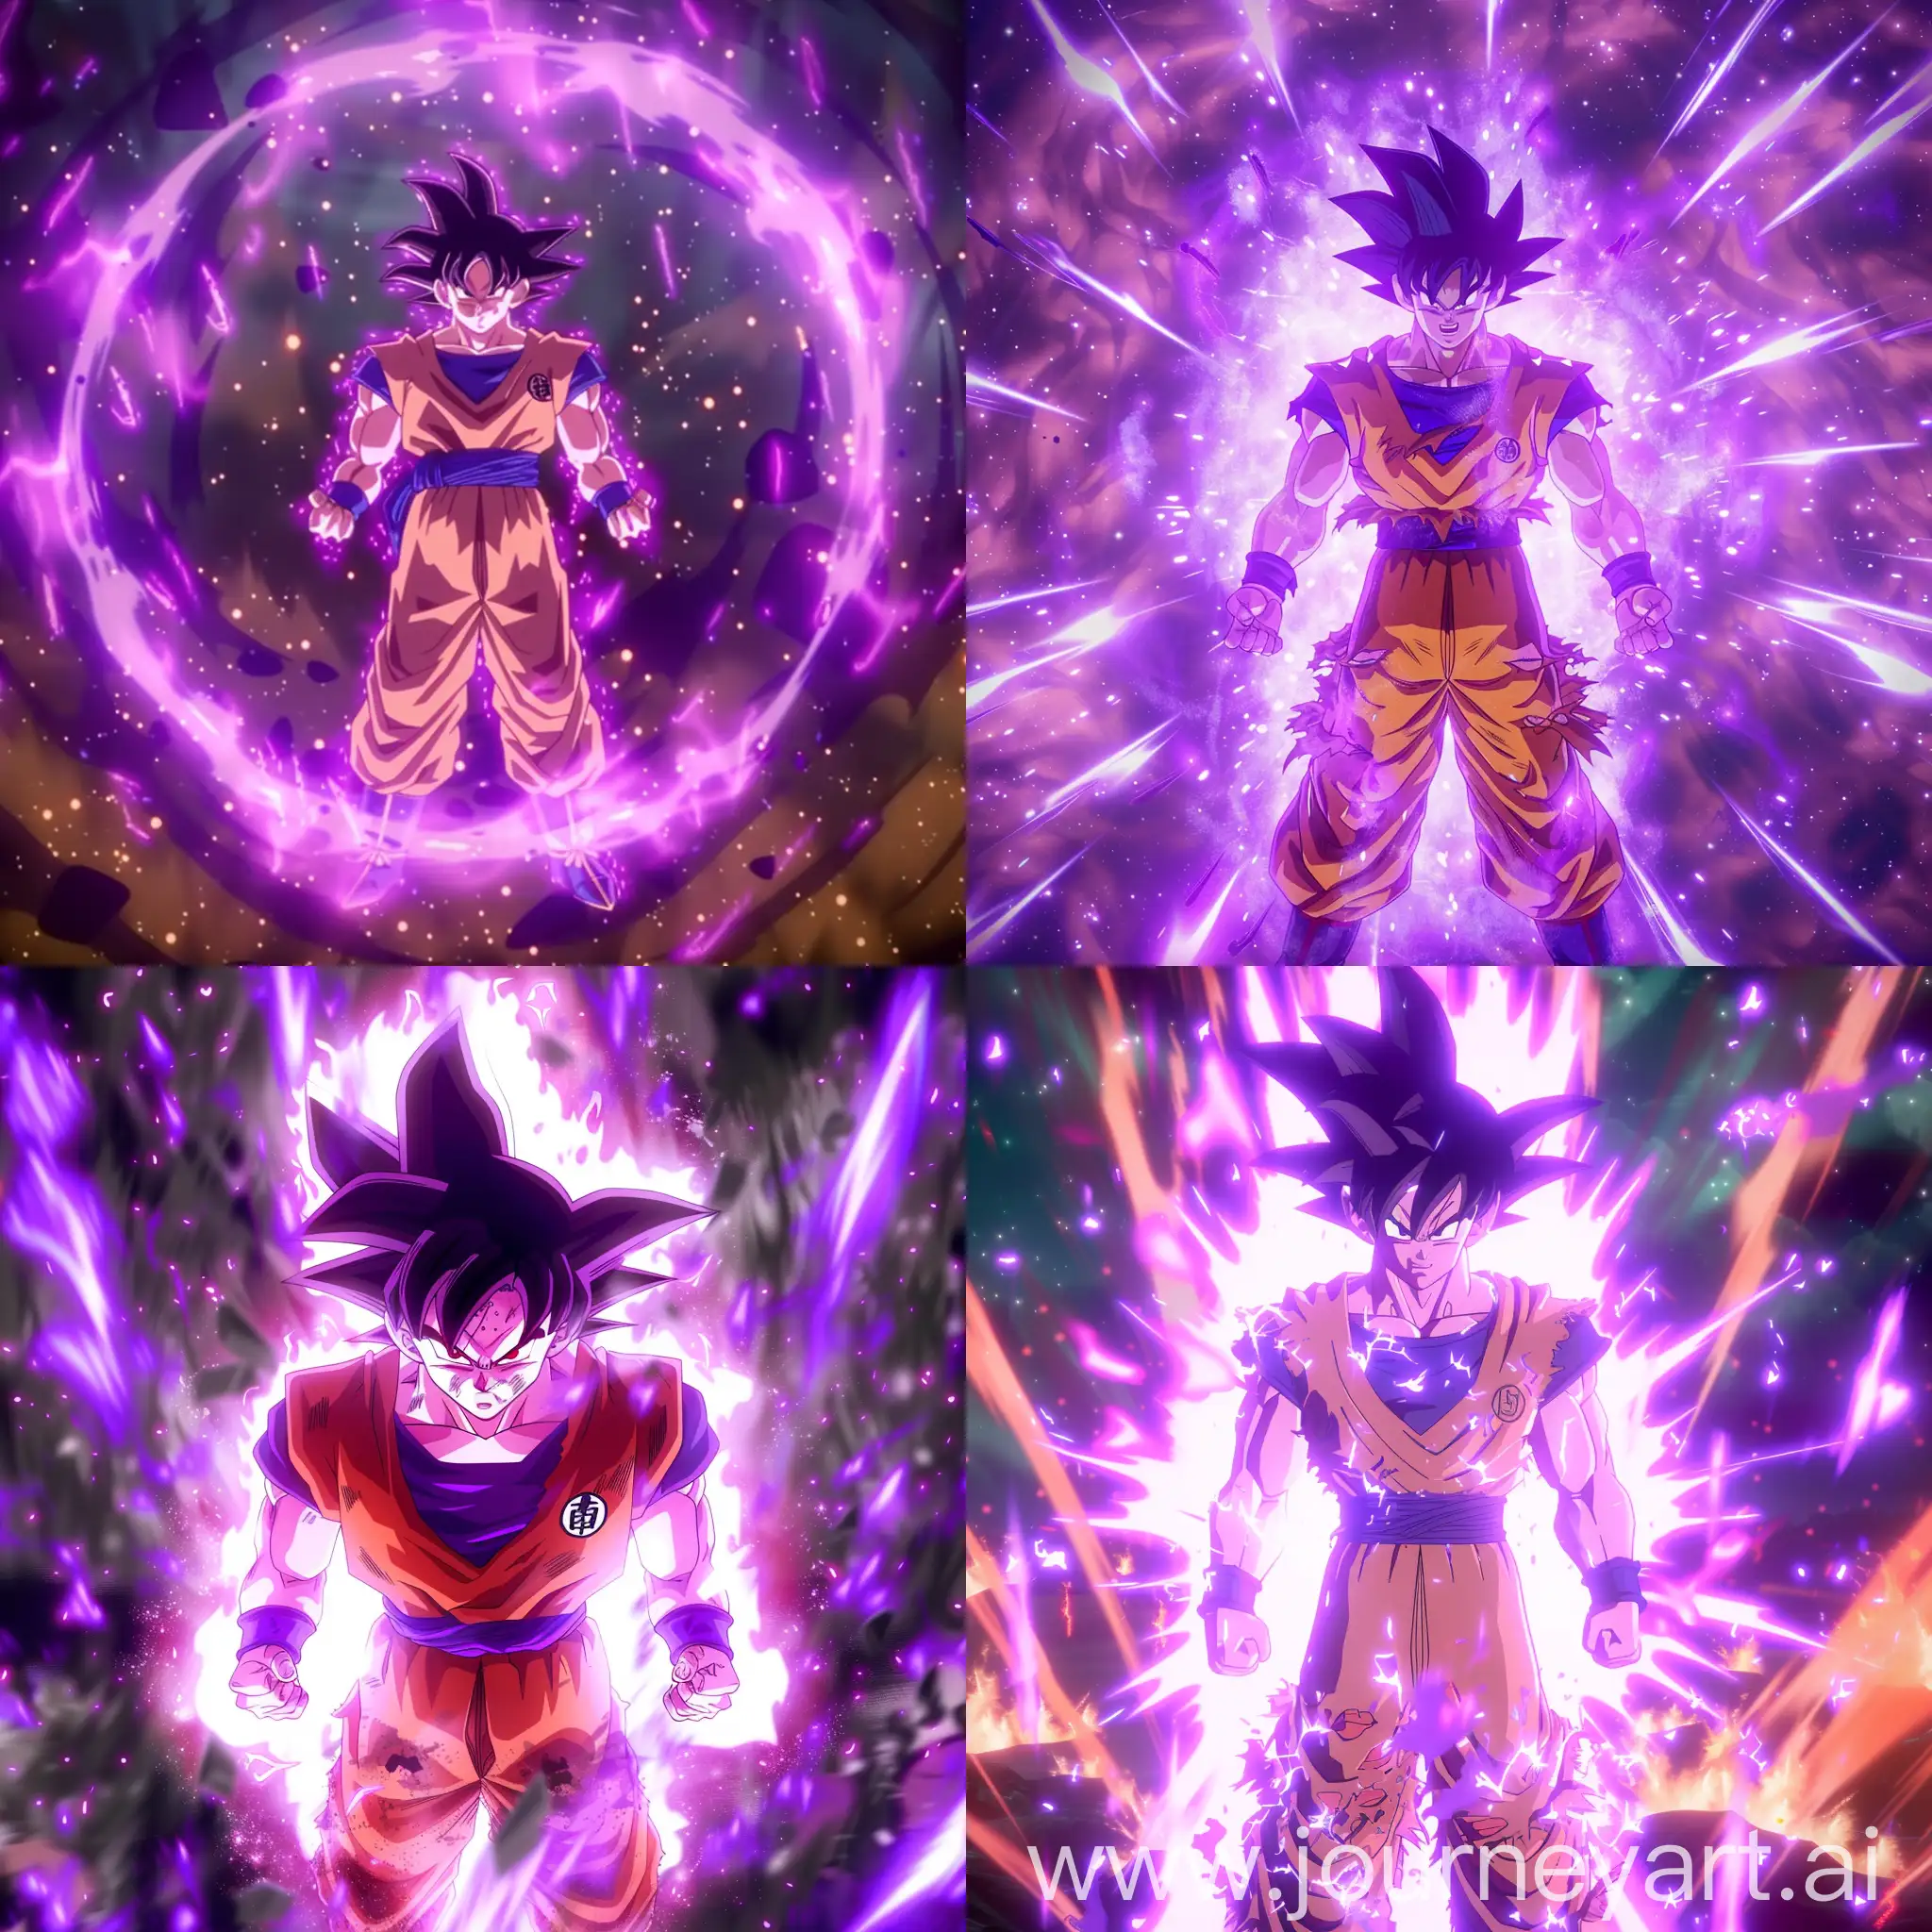 Goku surrounded by purple aura